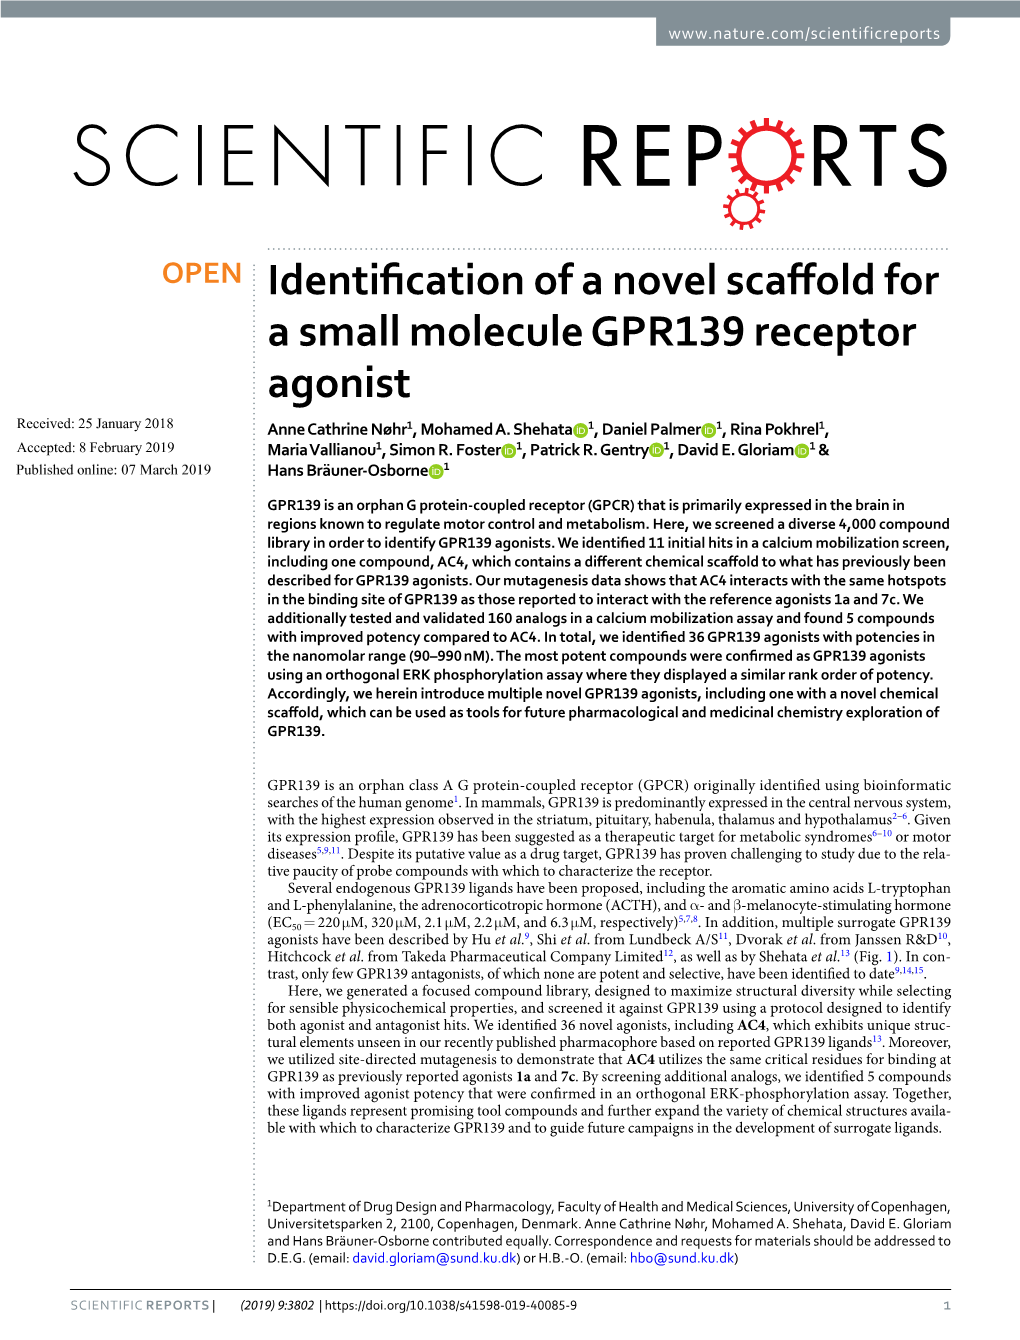 Identification of a Novel Scaffold for a Small Molecule GPR139 Receptor